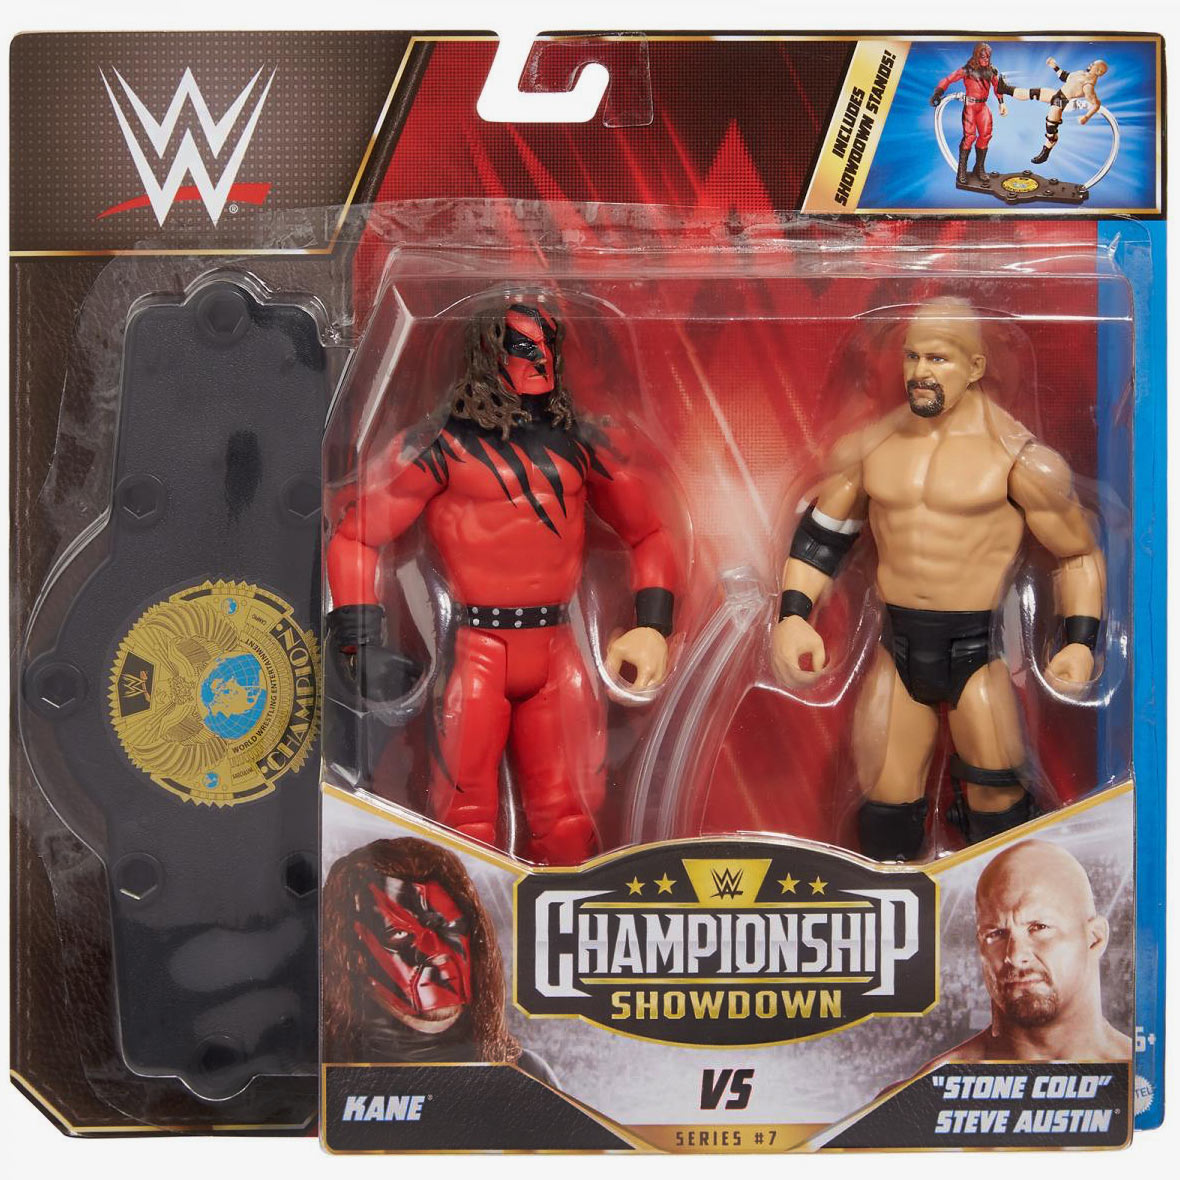 Kane & Stone Cold Steve Austin - WWE Championship Showdown 2-Pack Series #7